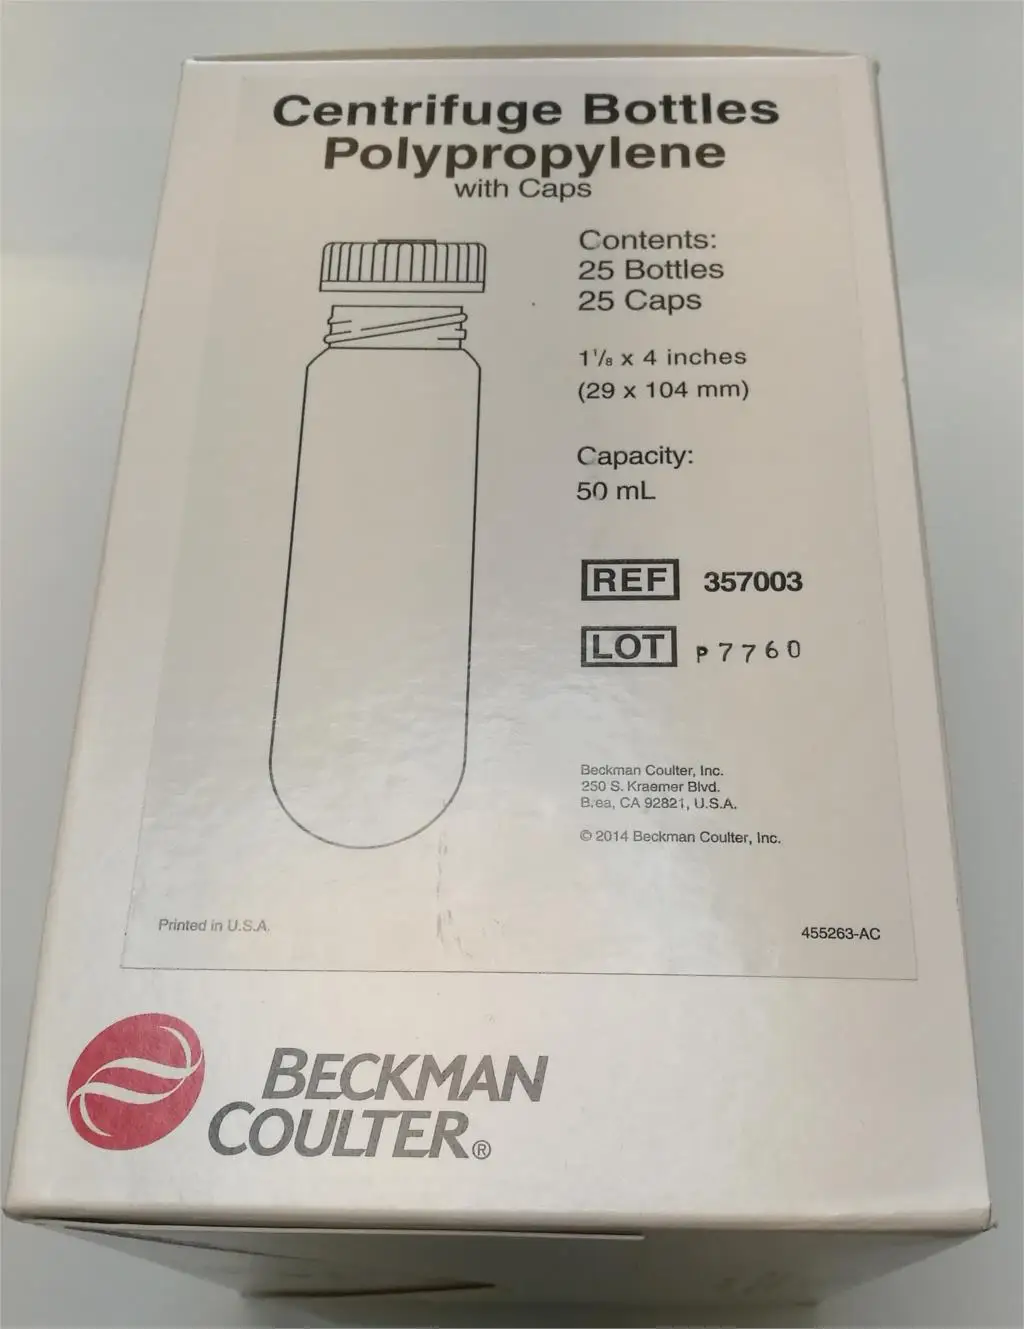 Для бекмен культер Пункт № 357003 50 мл центробежный бутылка с герметизирующая пробка бутылки, с Polyallomer, 50 мл, 29x104 мм